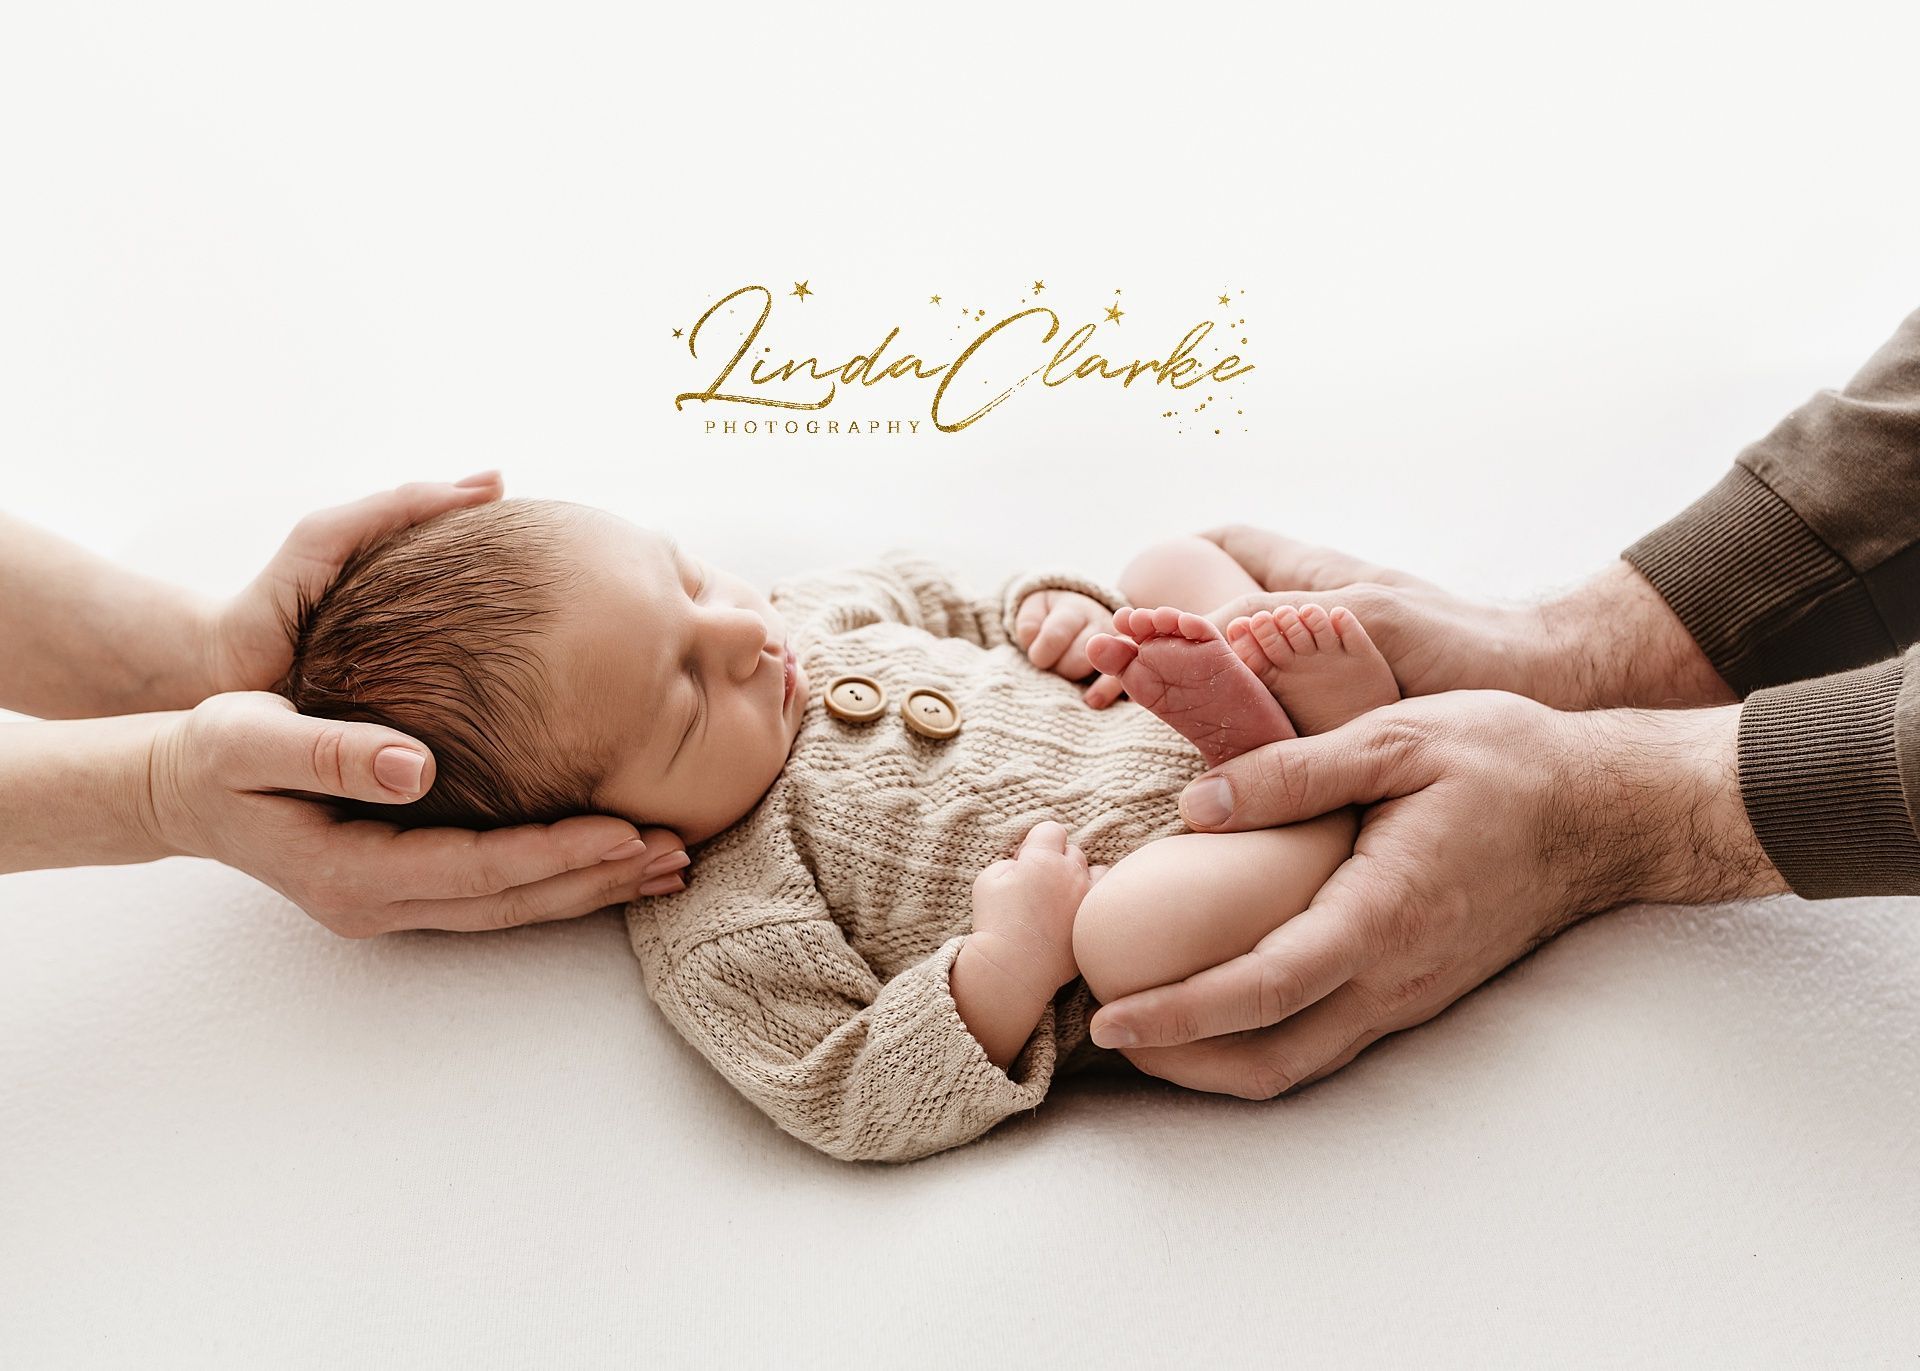 Newborn baby with parents hands during a newborn photoshoot in dublin Ireland